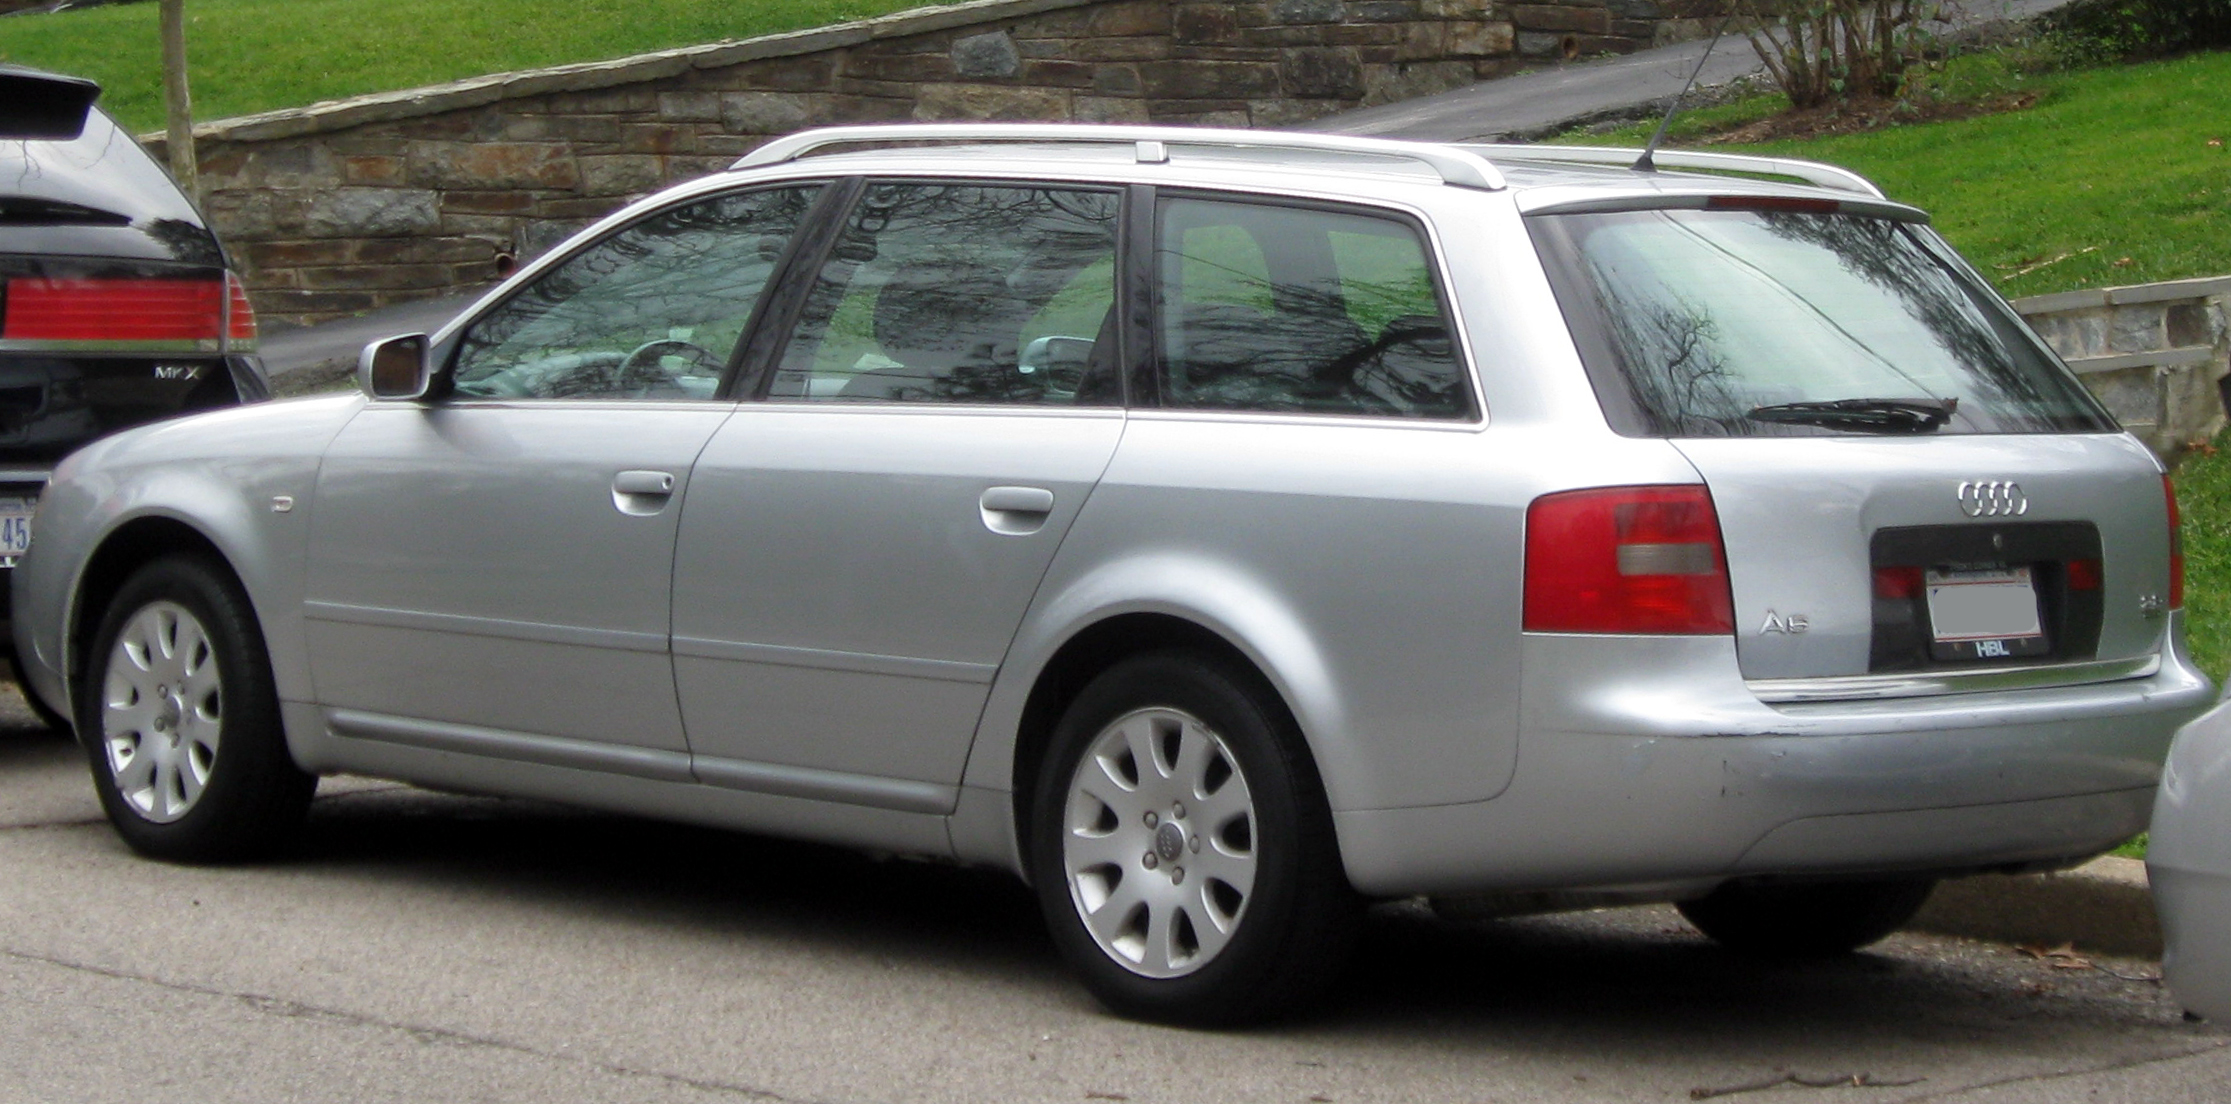 File:Audi A6 wagon -- 01-01-2012.jpg - Wikimedia Commons